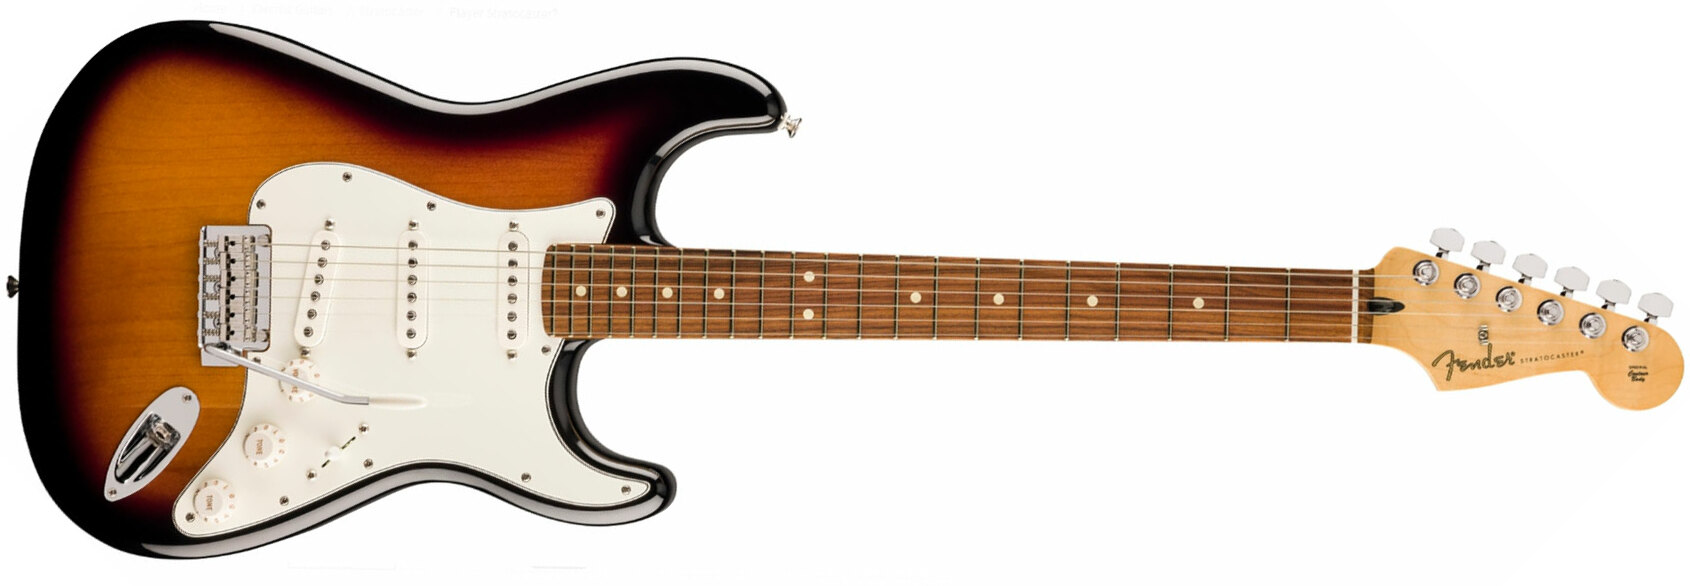 Fender Strat Player 70th Anniversary 3s Trem Pf - 2-color Sunburst - Str shape electric guitar - Main picture